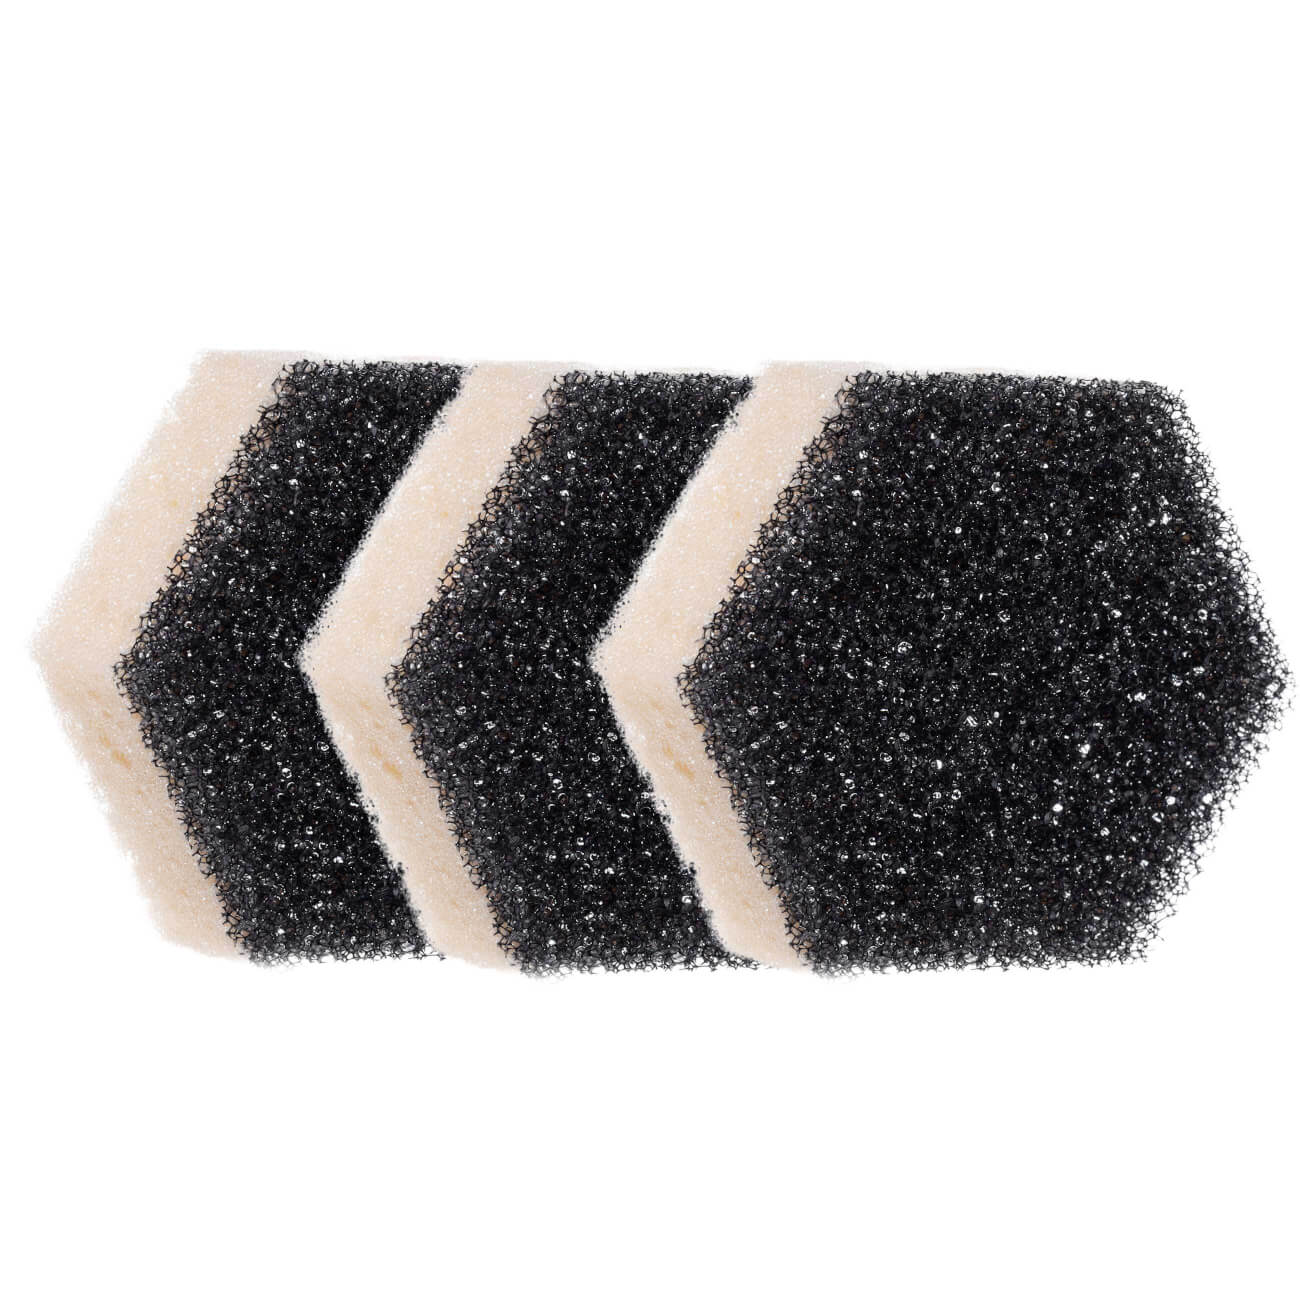 Dish washing sponge, 9x8 cm, 3 pcs, foam rubber/abrasive, black and beige, Black clean изображение № 1